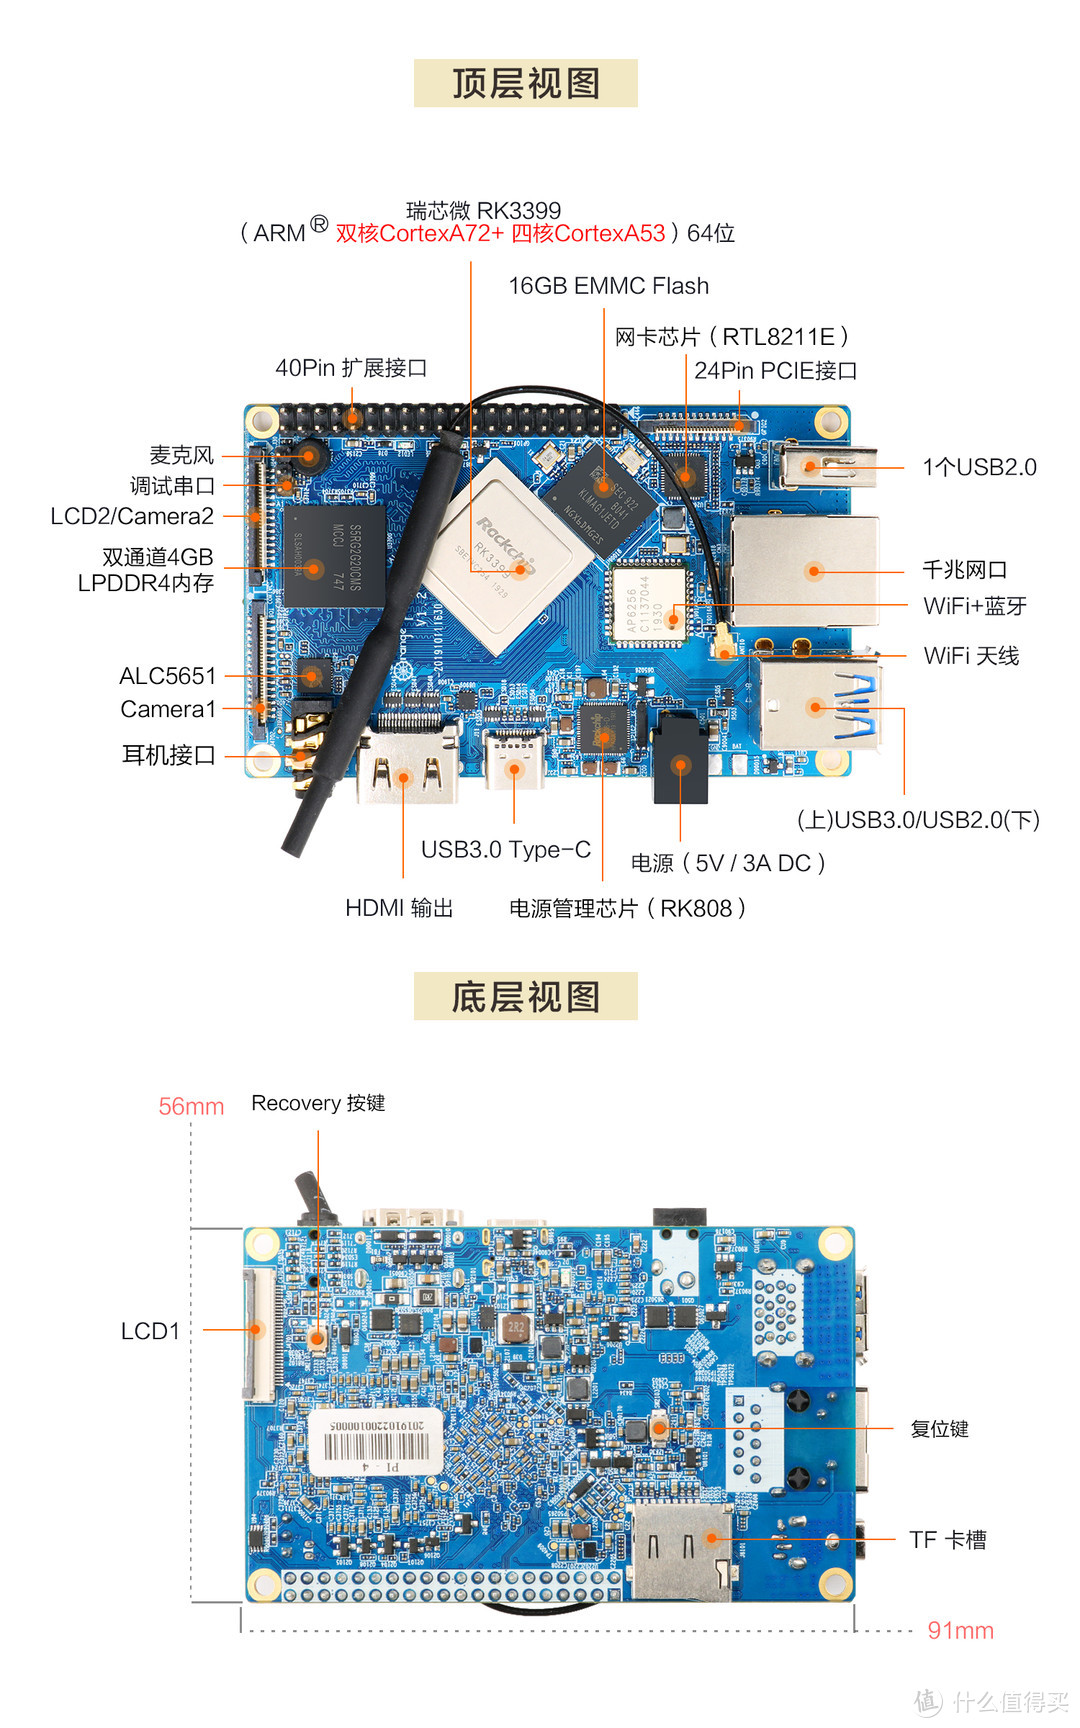 RK3399轻量版Orange Pi 4 即将开售，打造你的专属“口袋电脑”